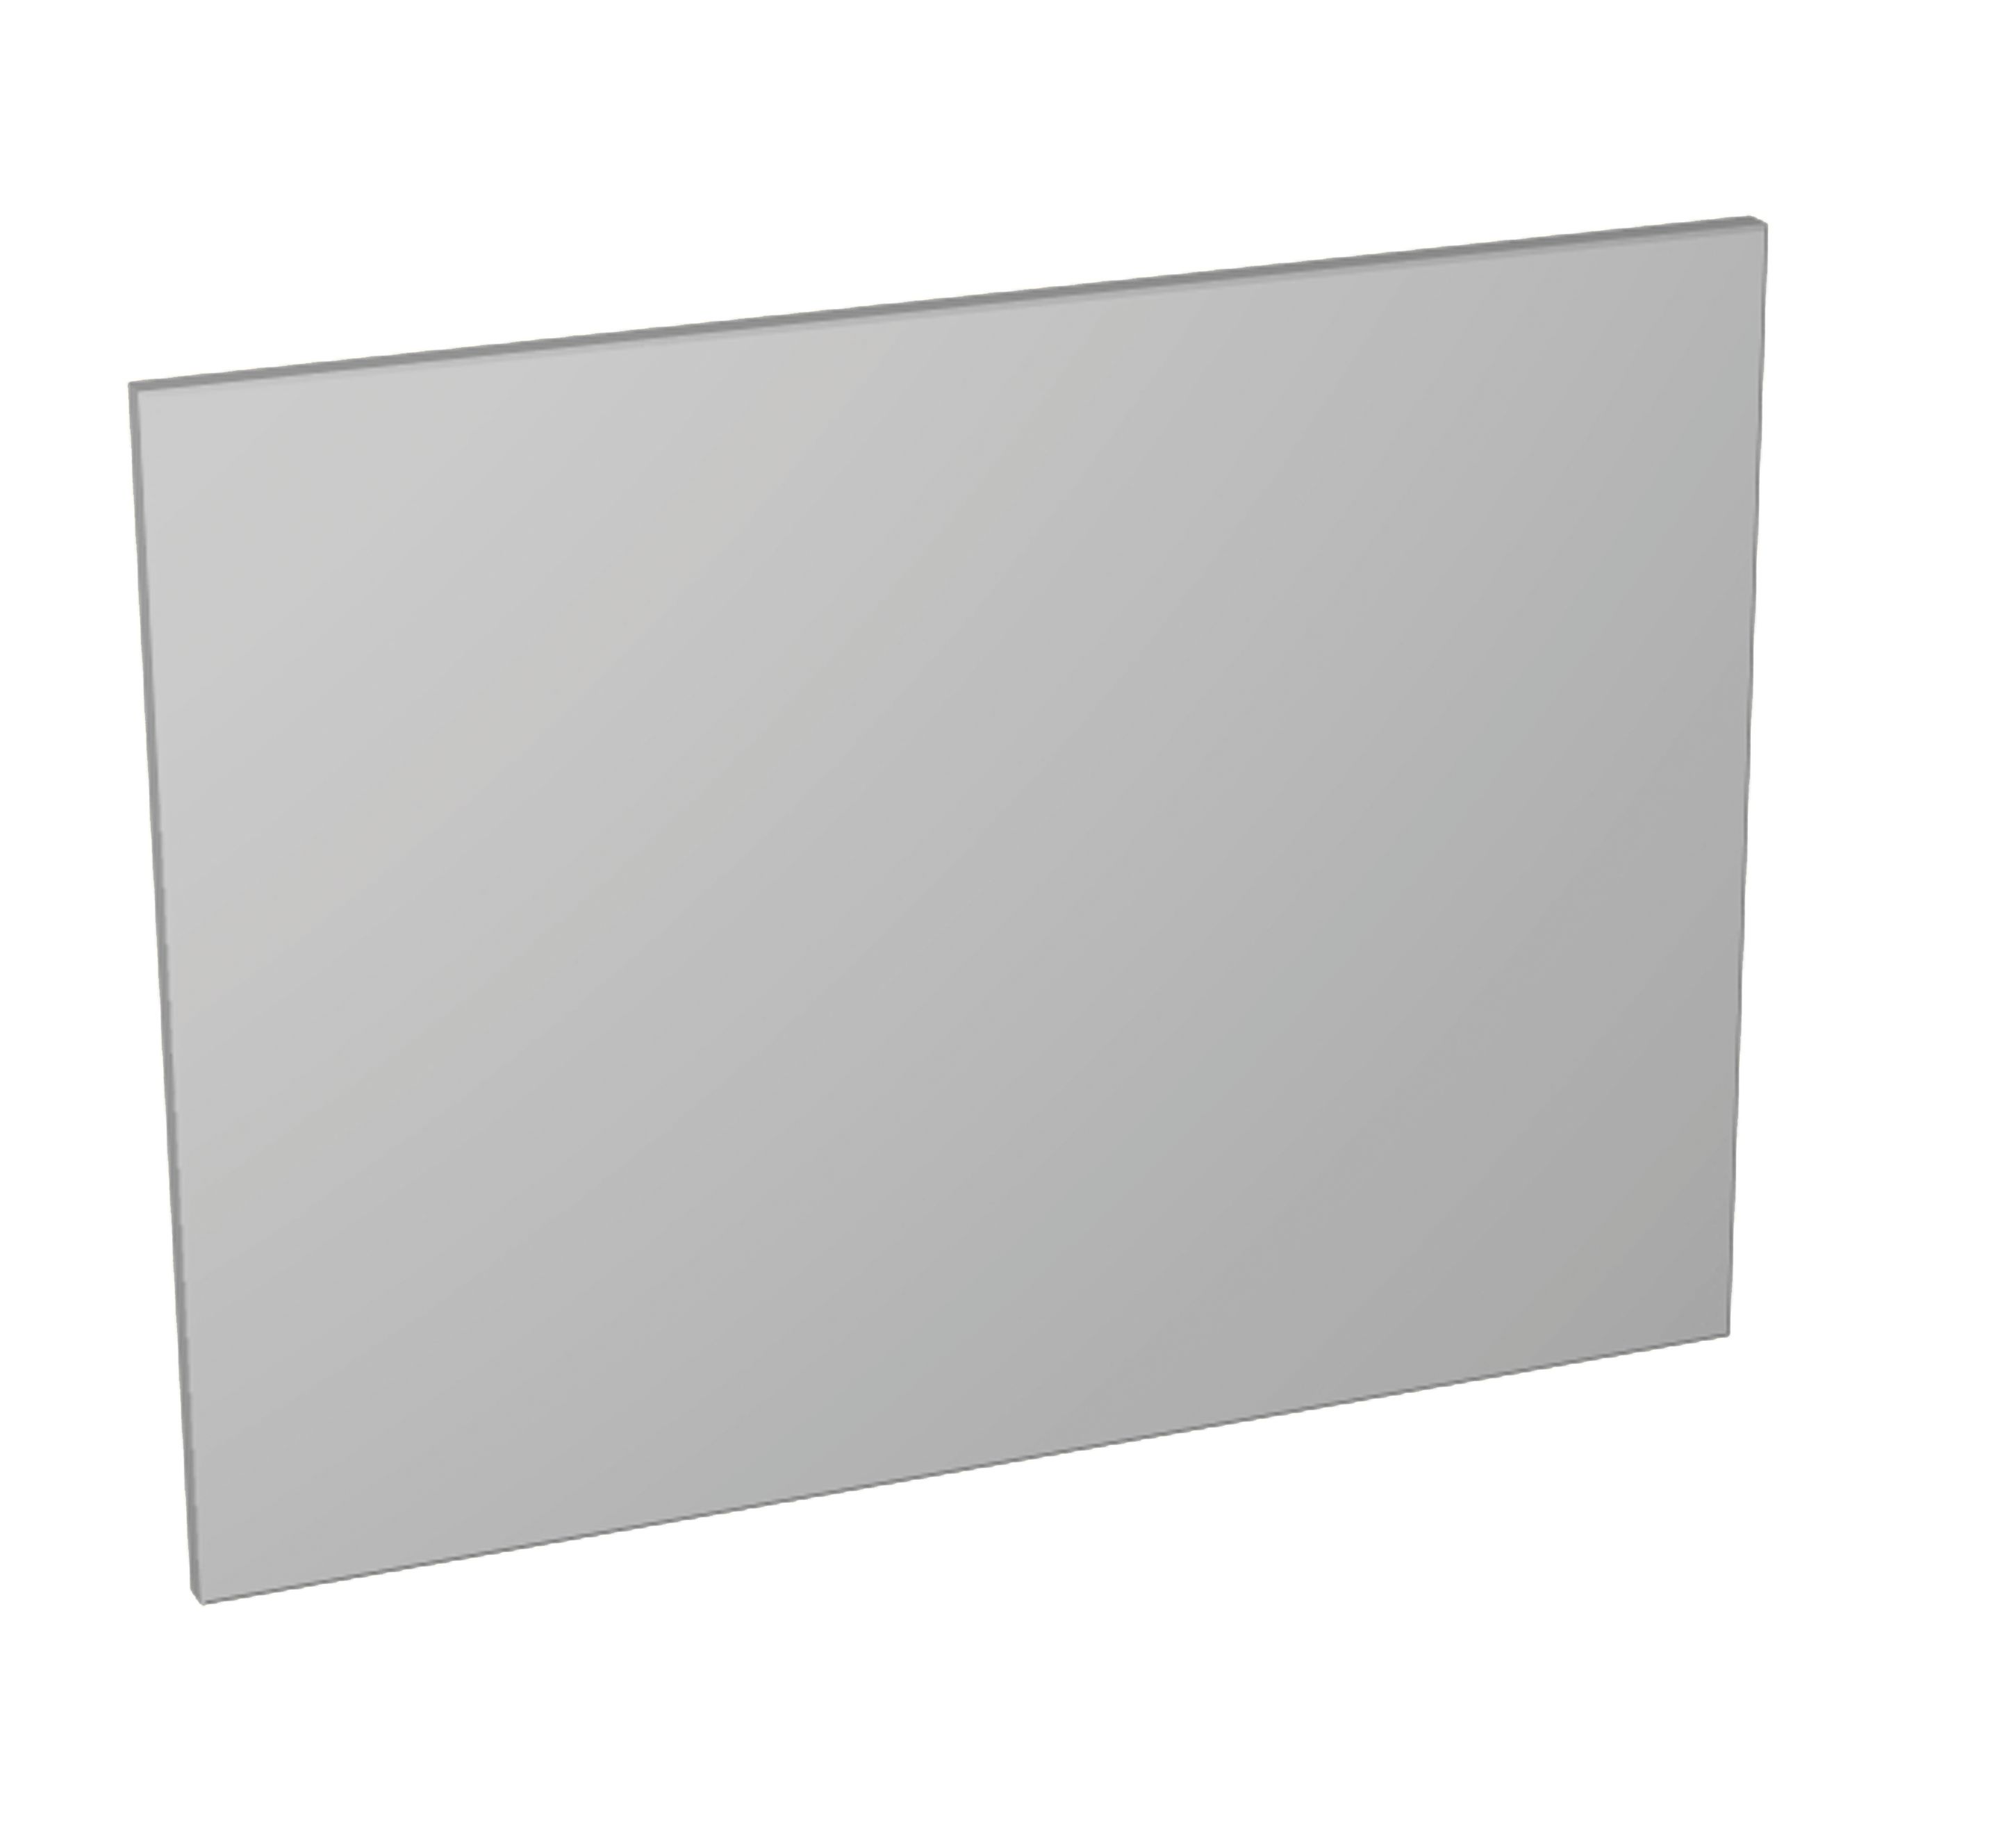 Wickes Orlando Grey Gloss Slab Appliance Door (D) - 600 x 437mm